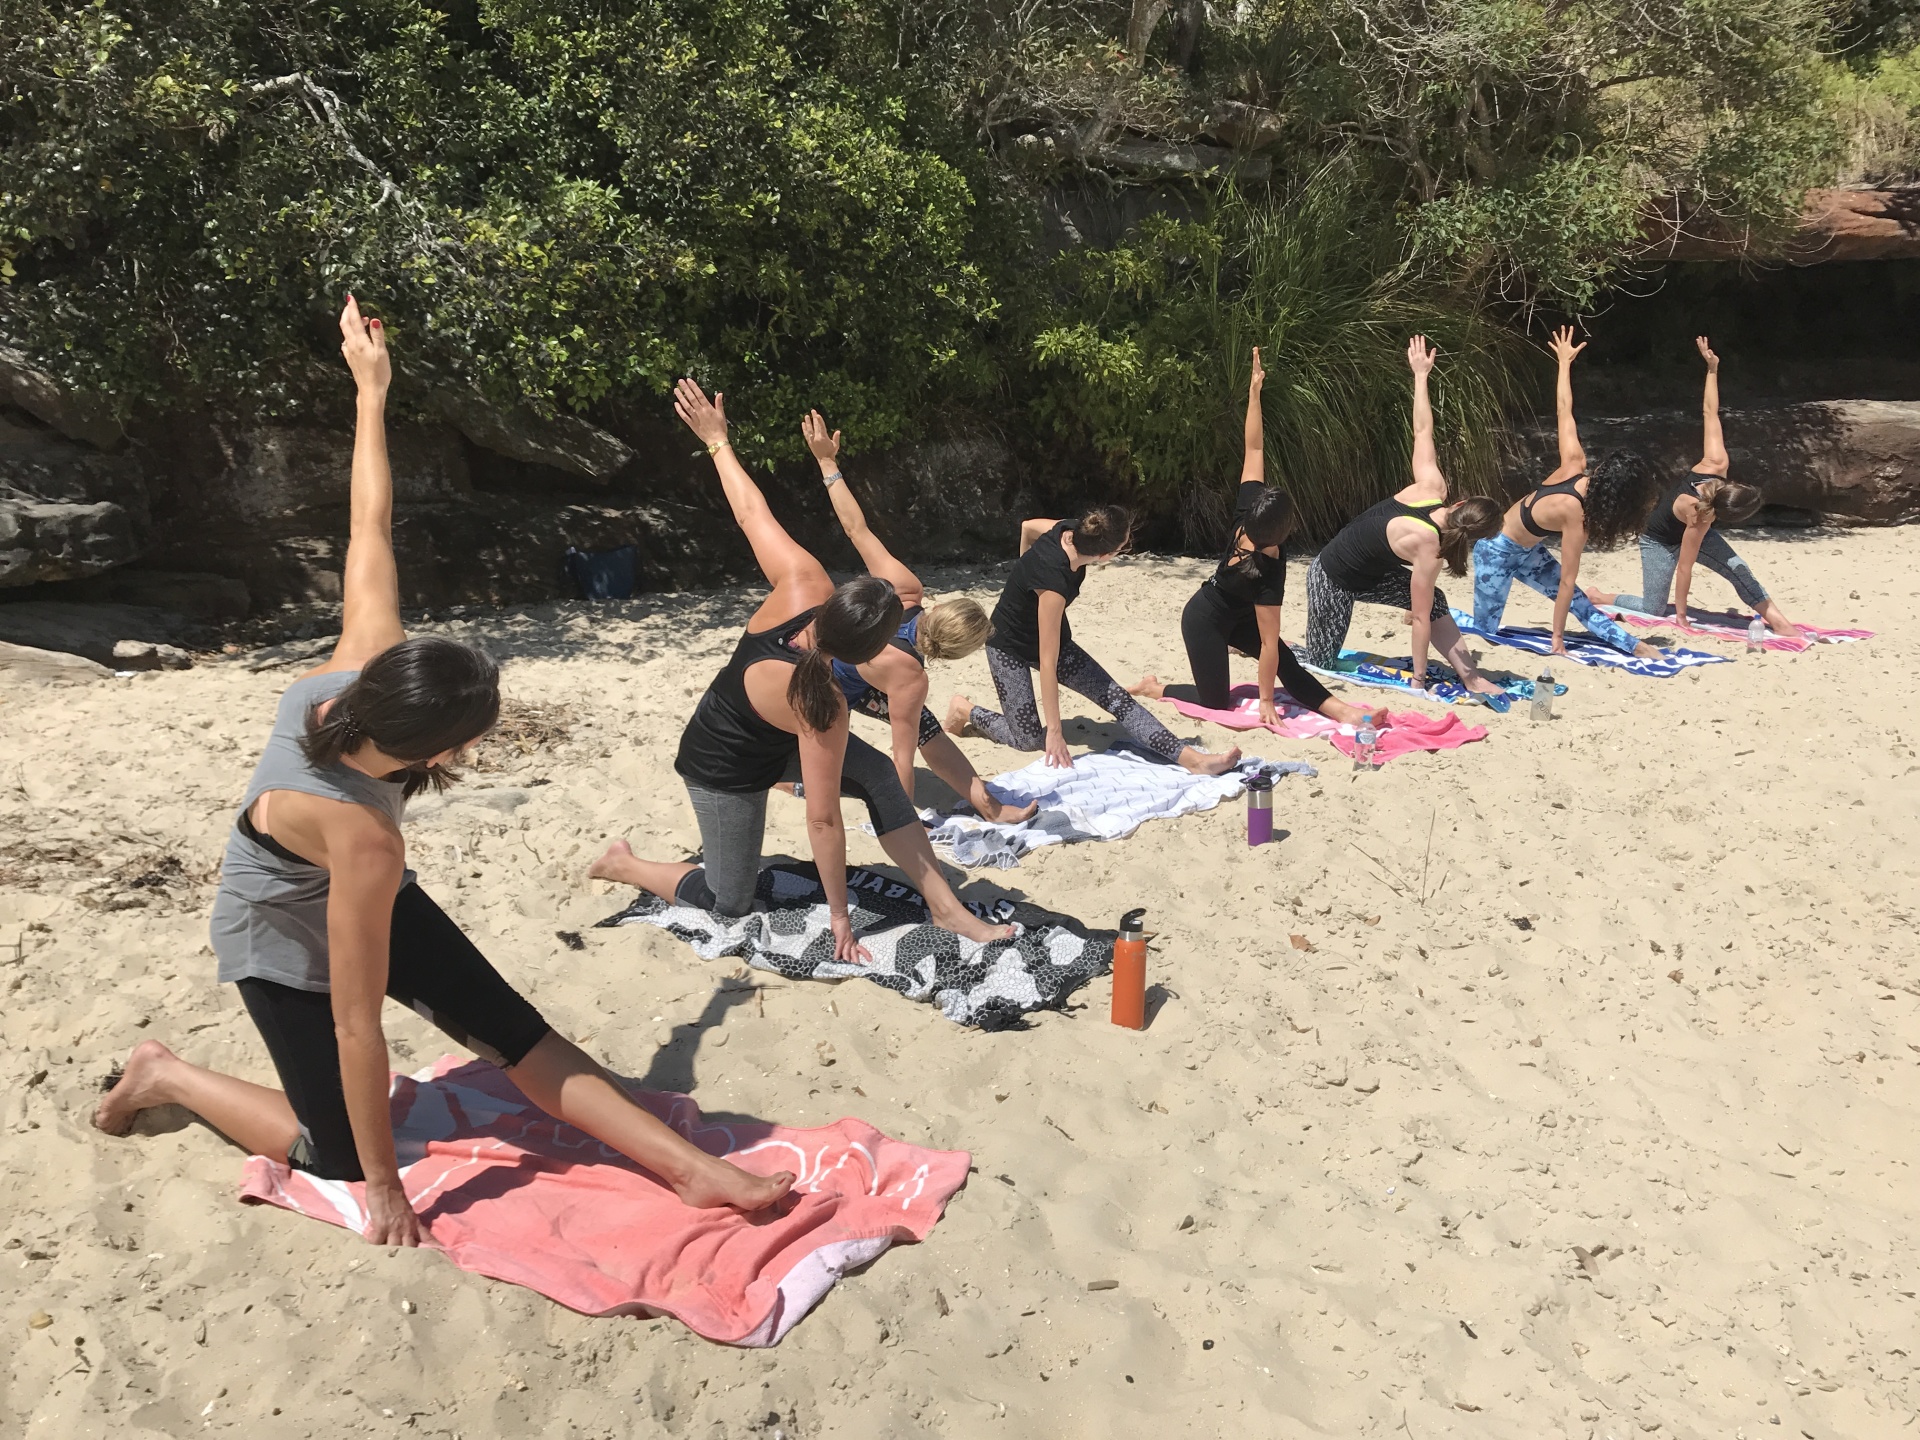 Beach Yoga Mat